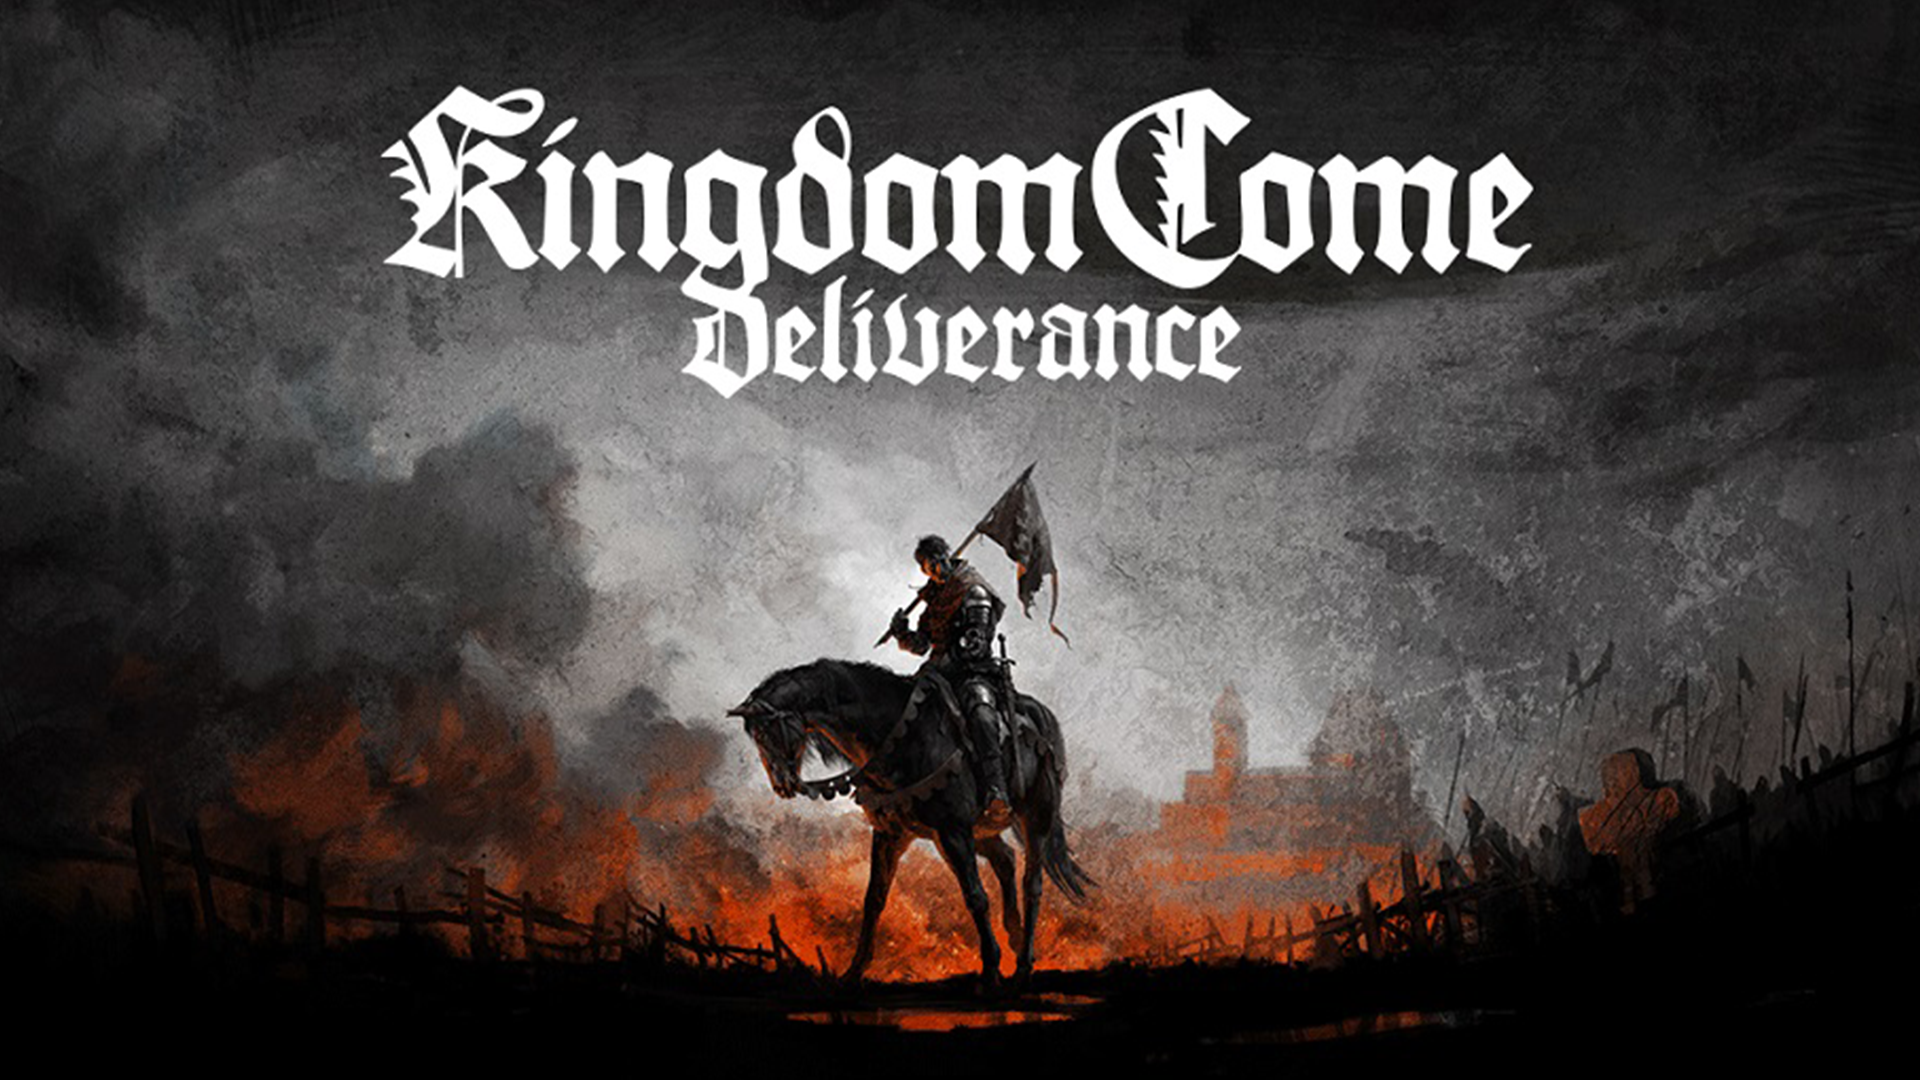 Kingdom E Deliverance HD Wallpaper And Background Image